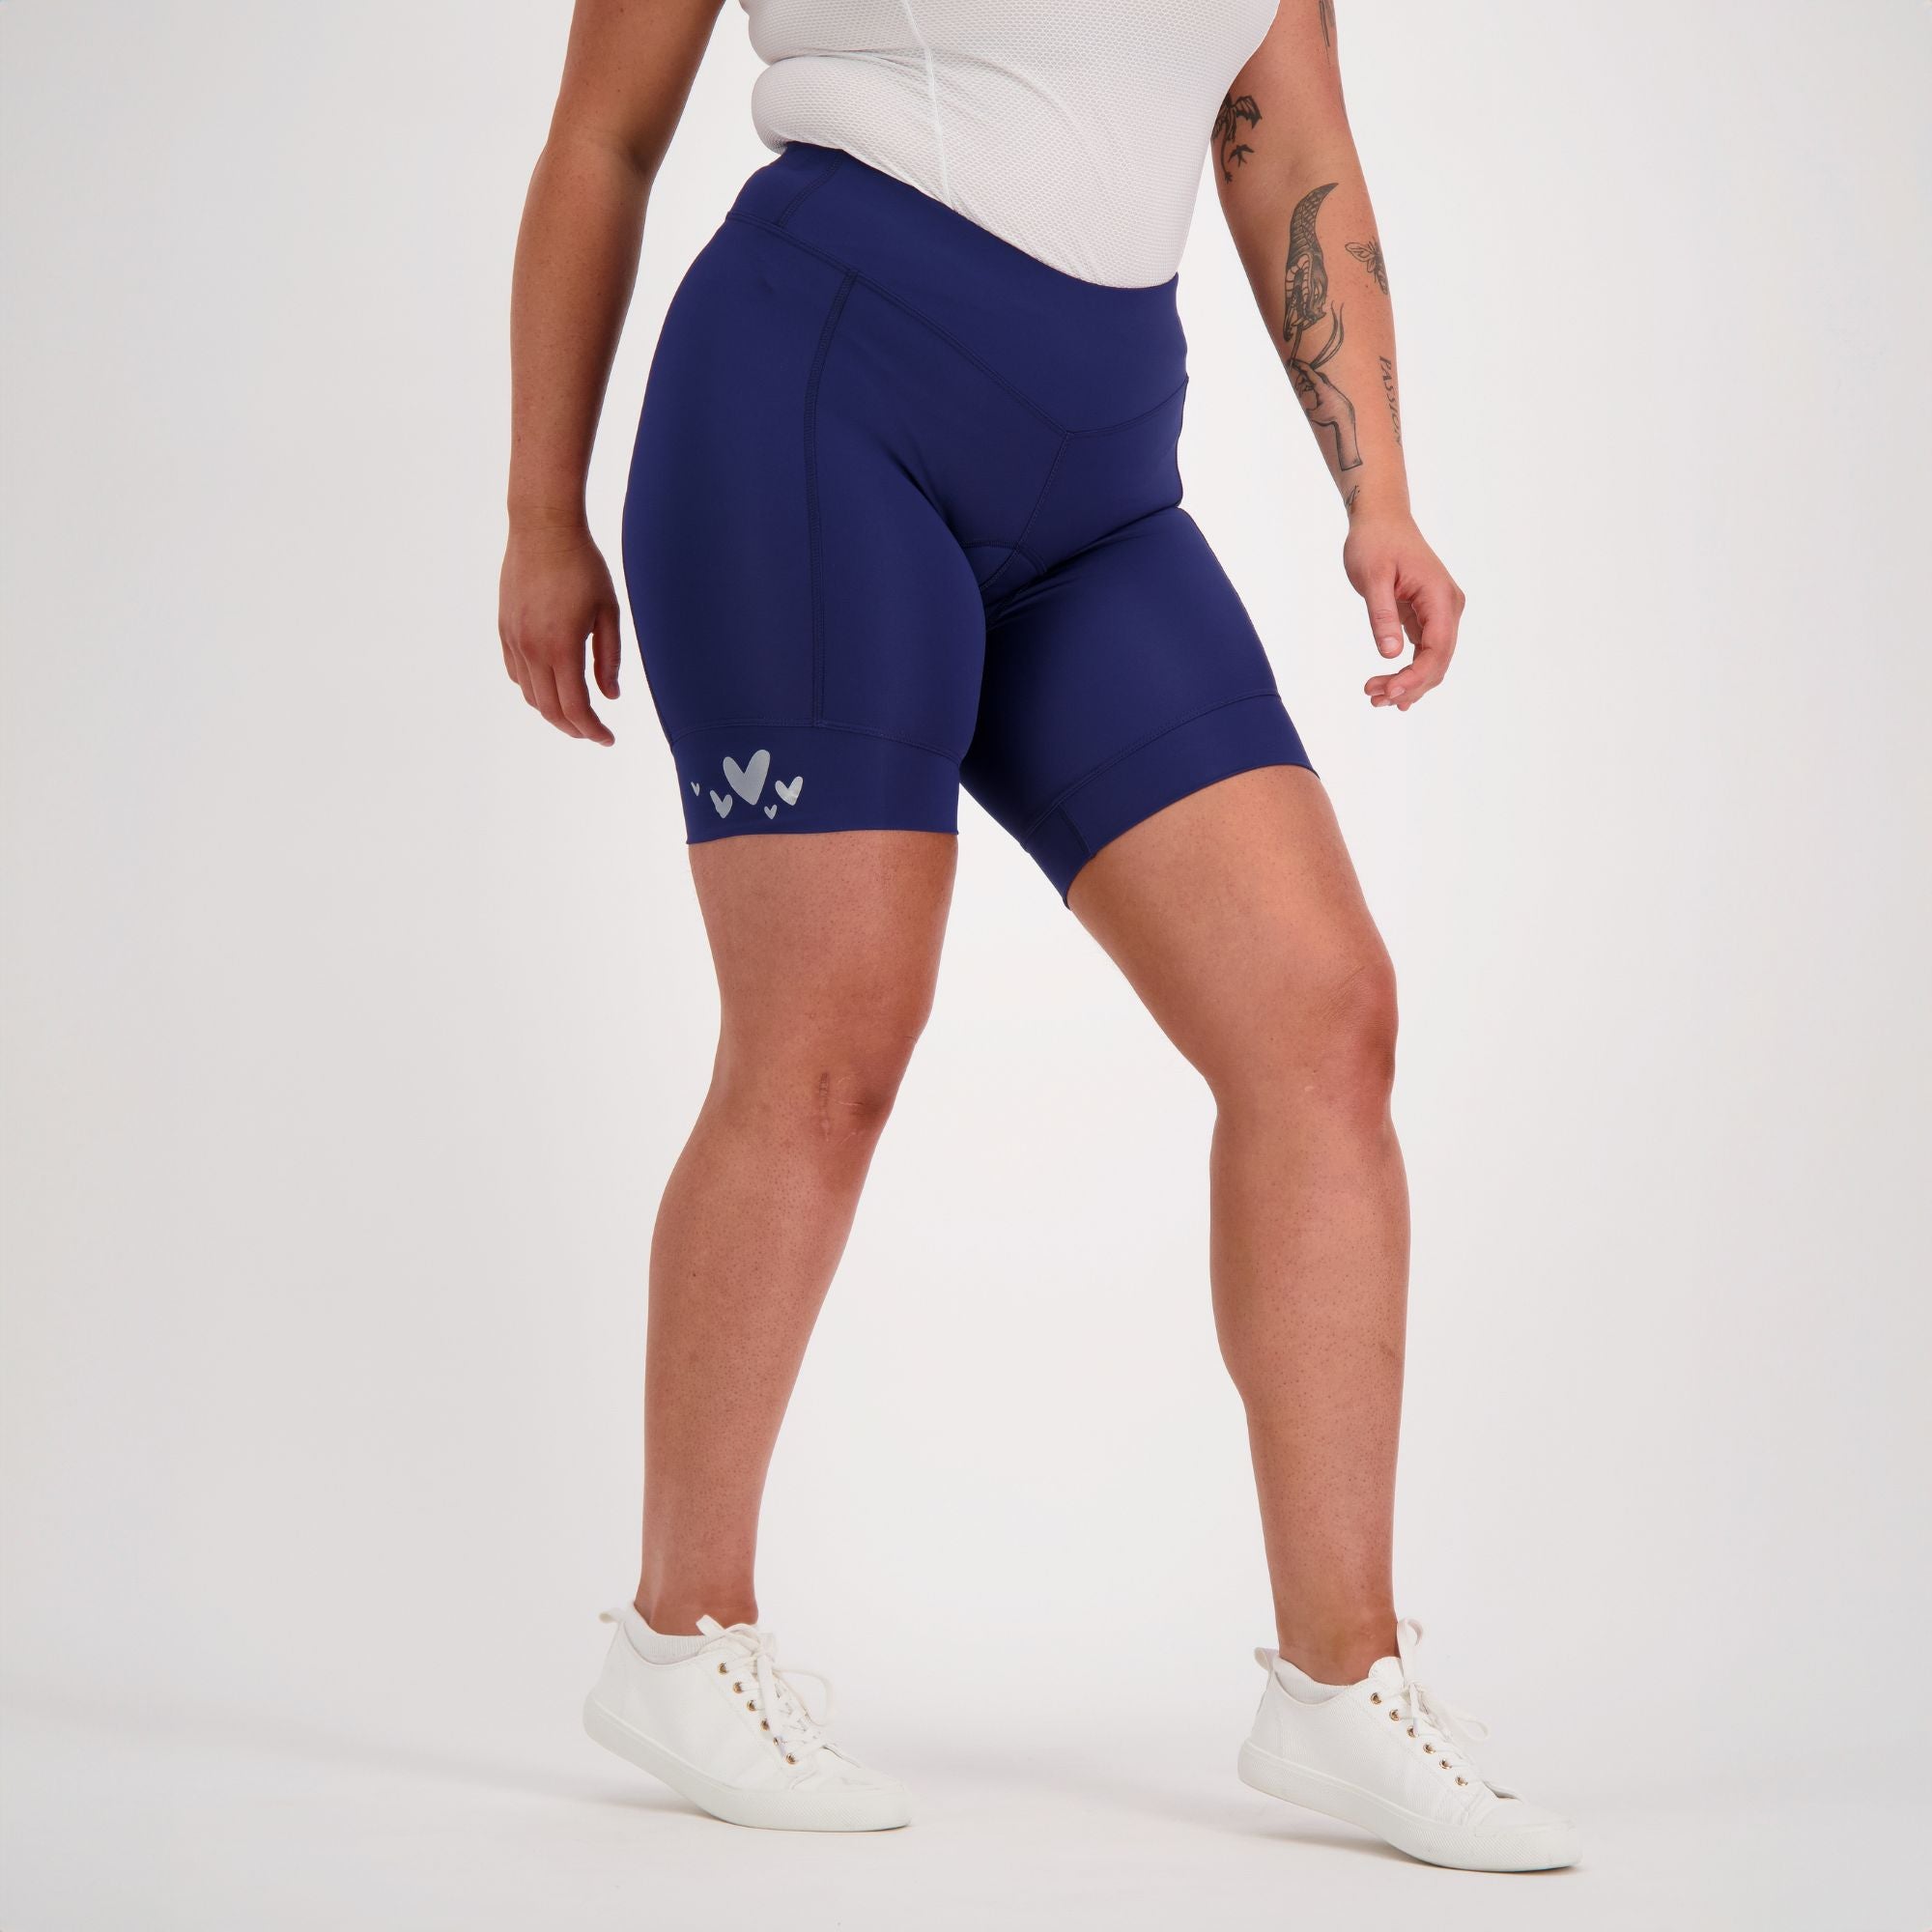 Female model wearing bay blue cruiser padded bike pants